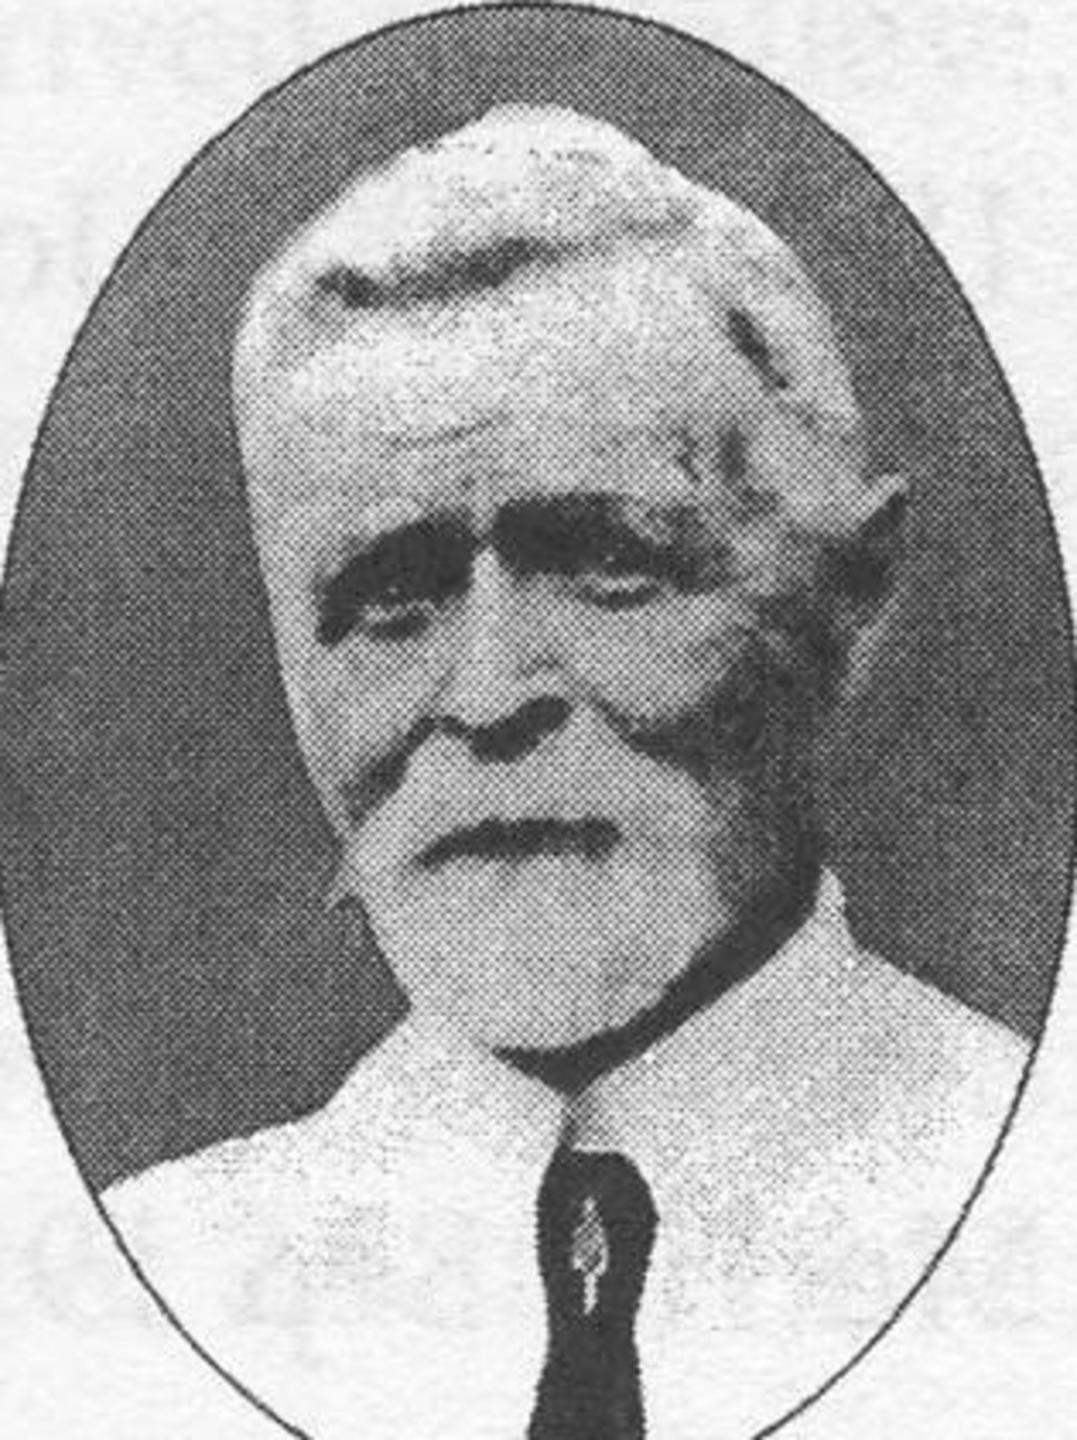 Albert George Henry Marchant (1845 - 1920) Profile